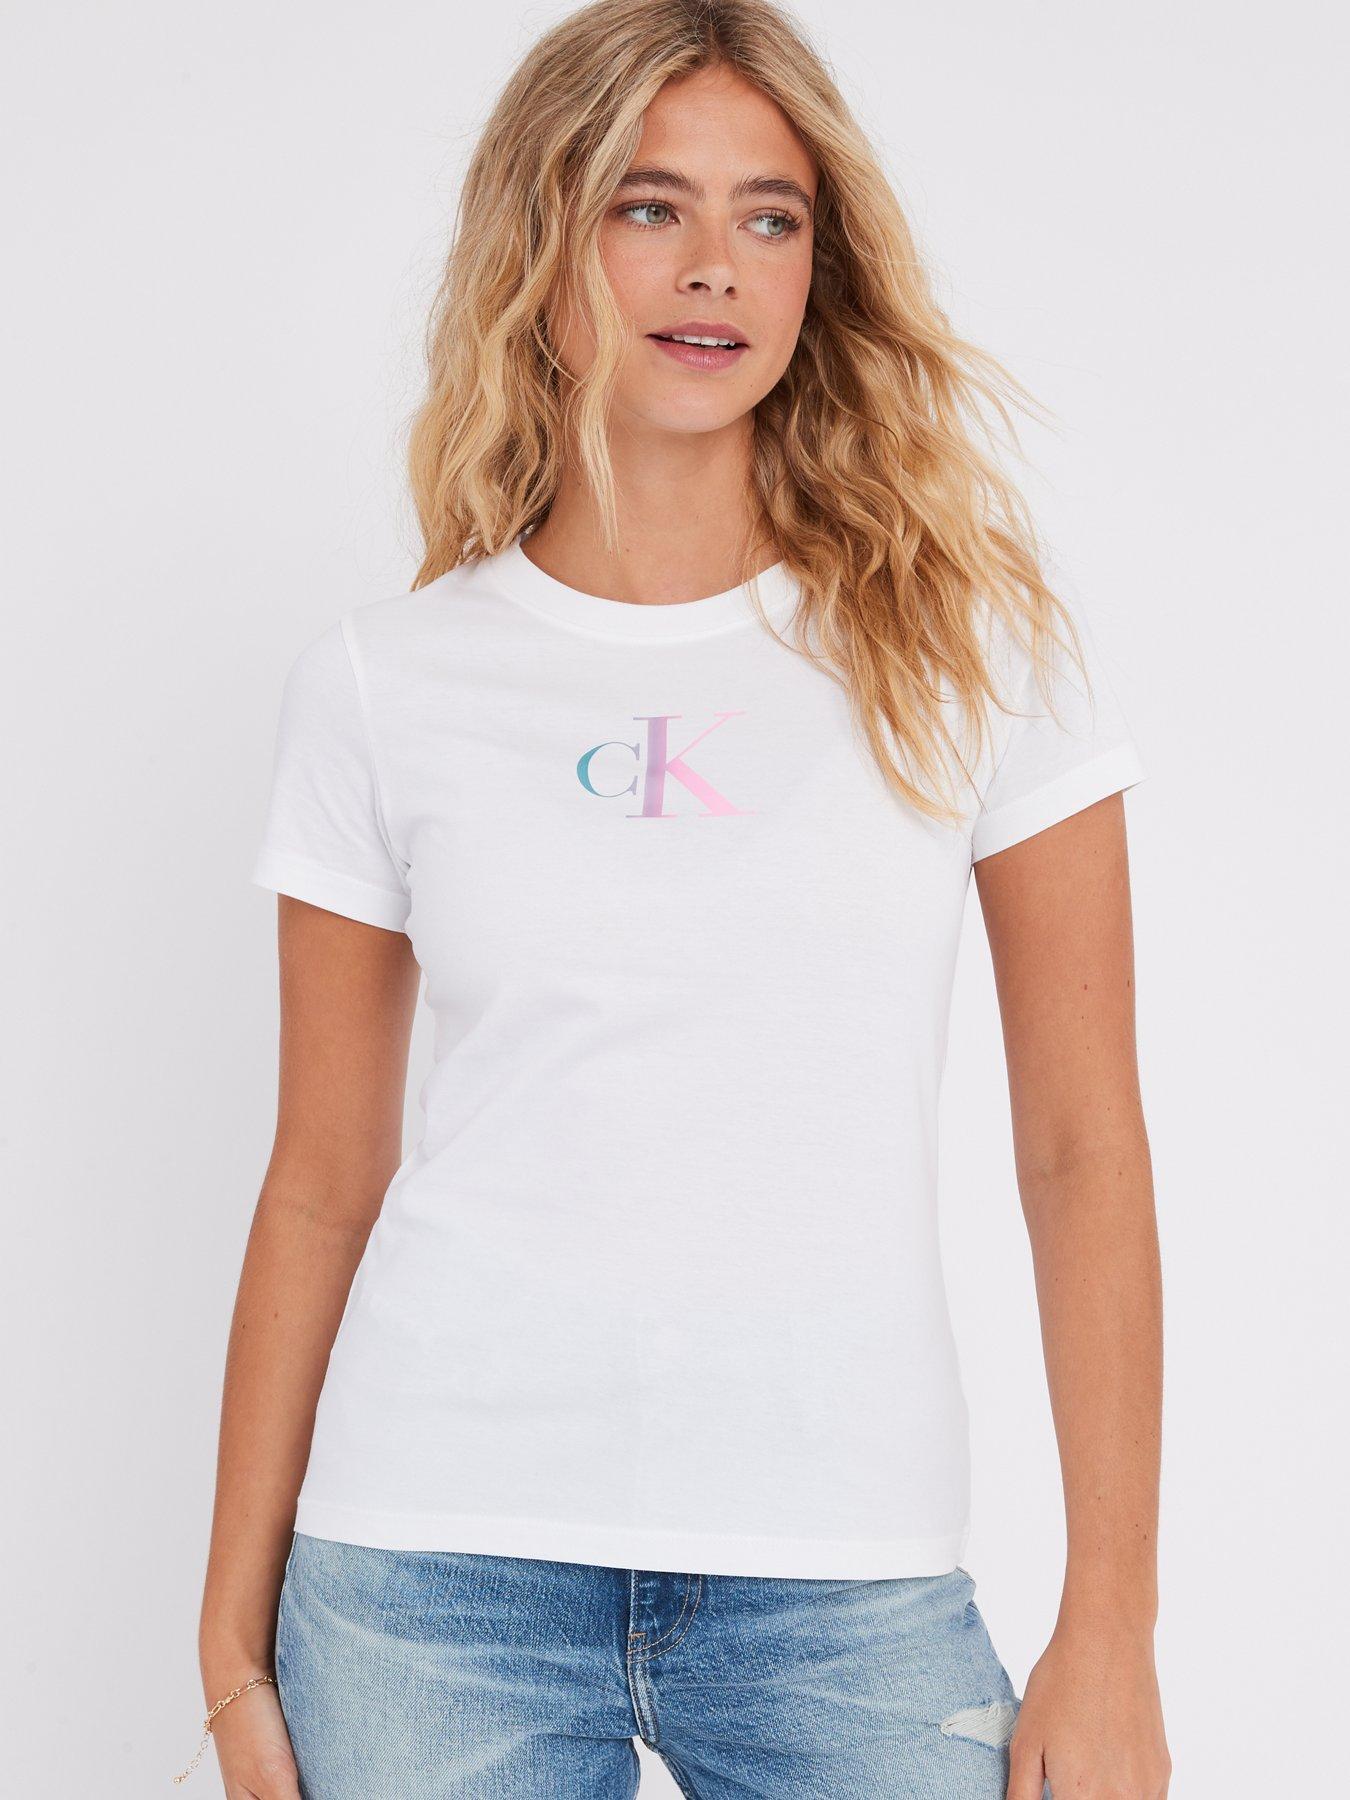 Plus Size | Calvin klein | Tops & t-shirts | Women | Very Ireland | T-Shirts